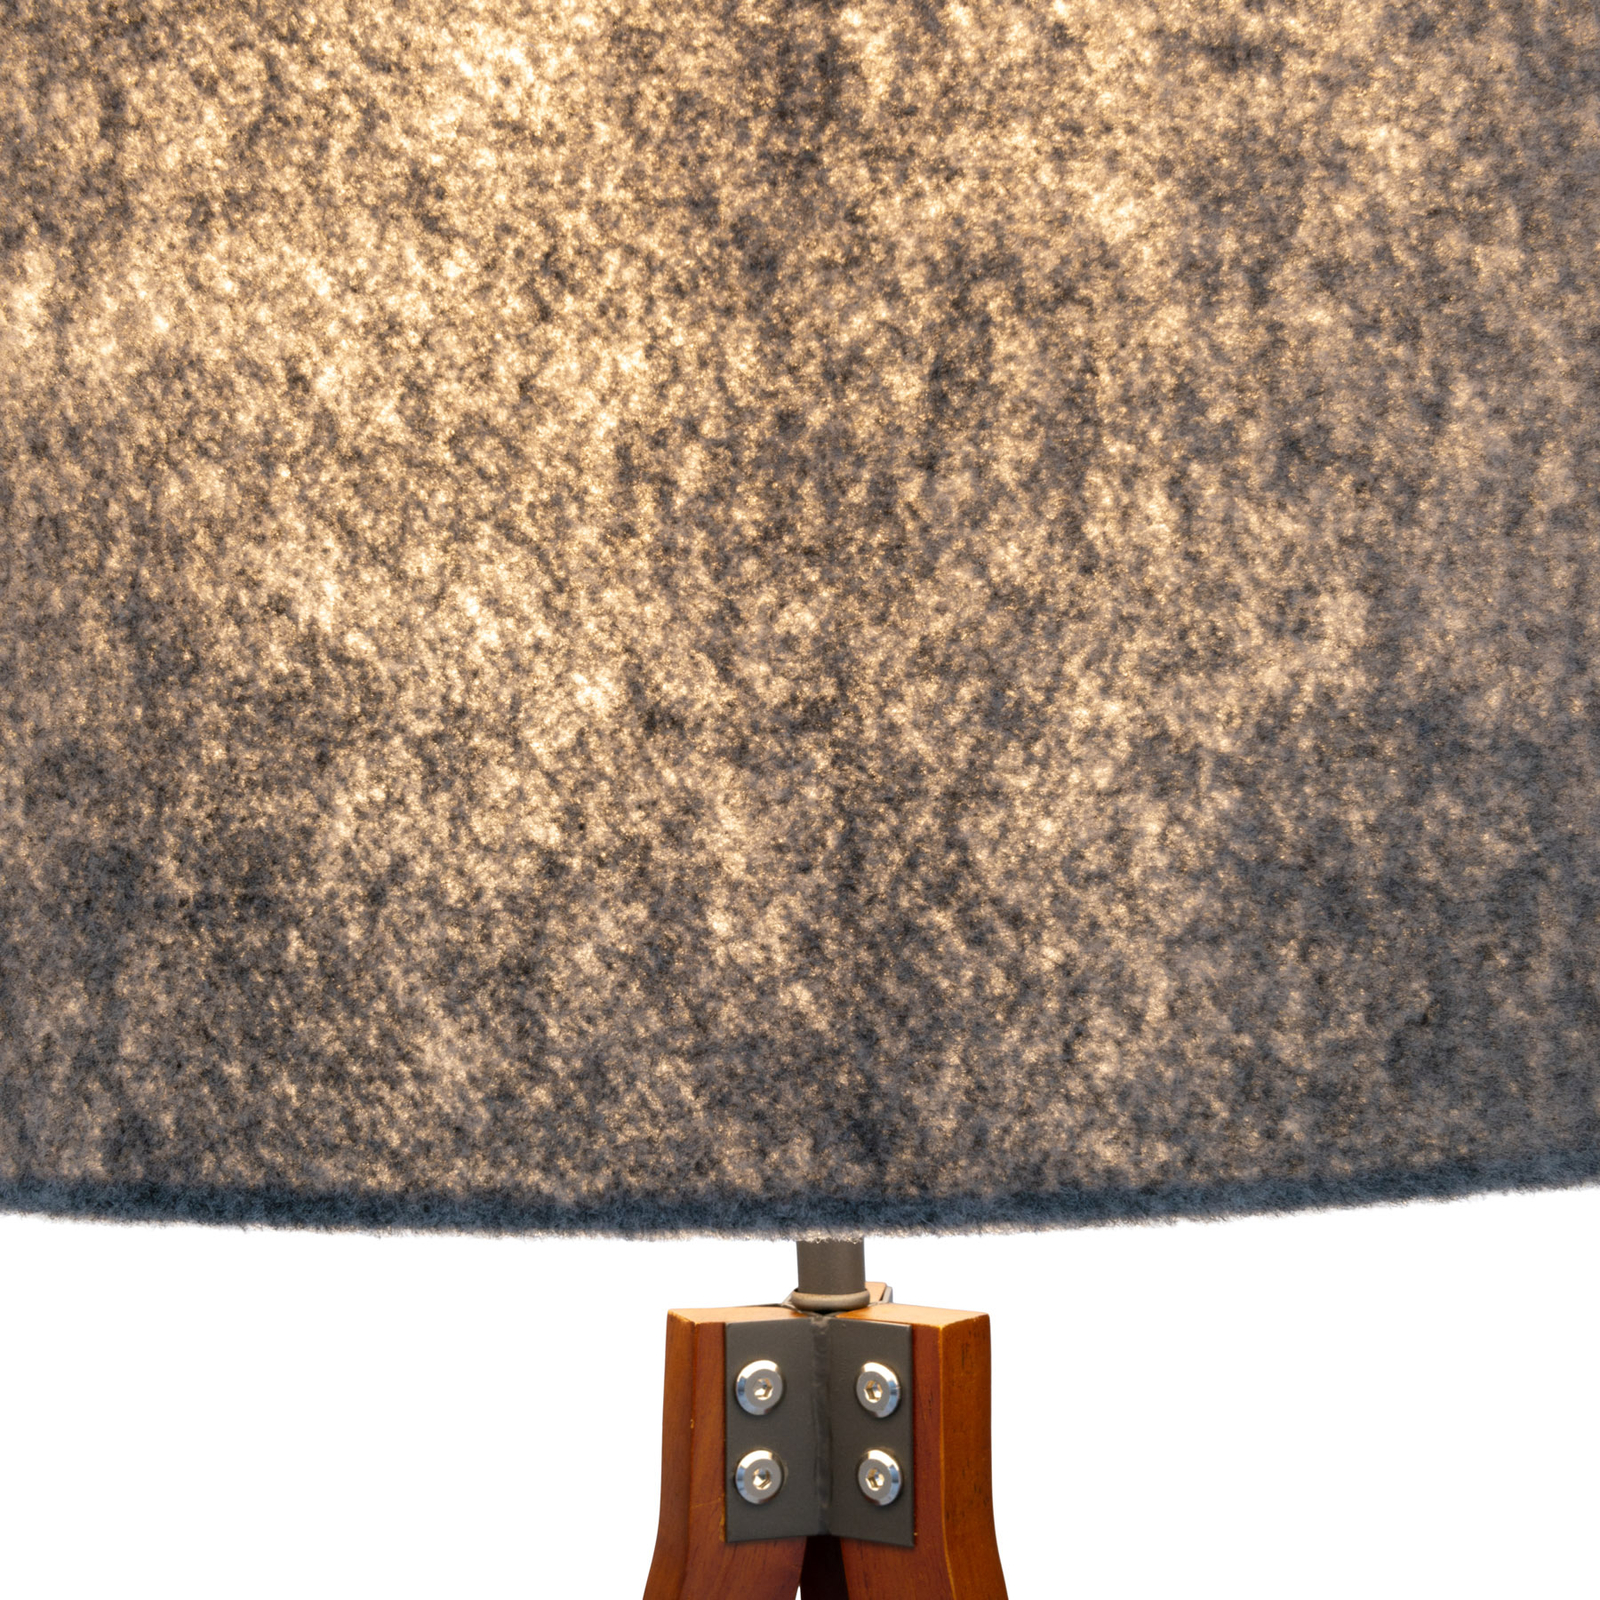 Stojací lampa 2072528, třínožka ze dřeva, textil